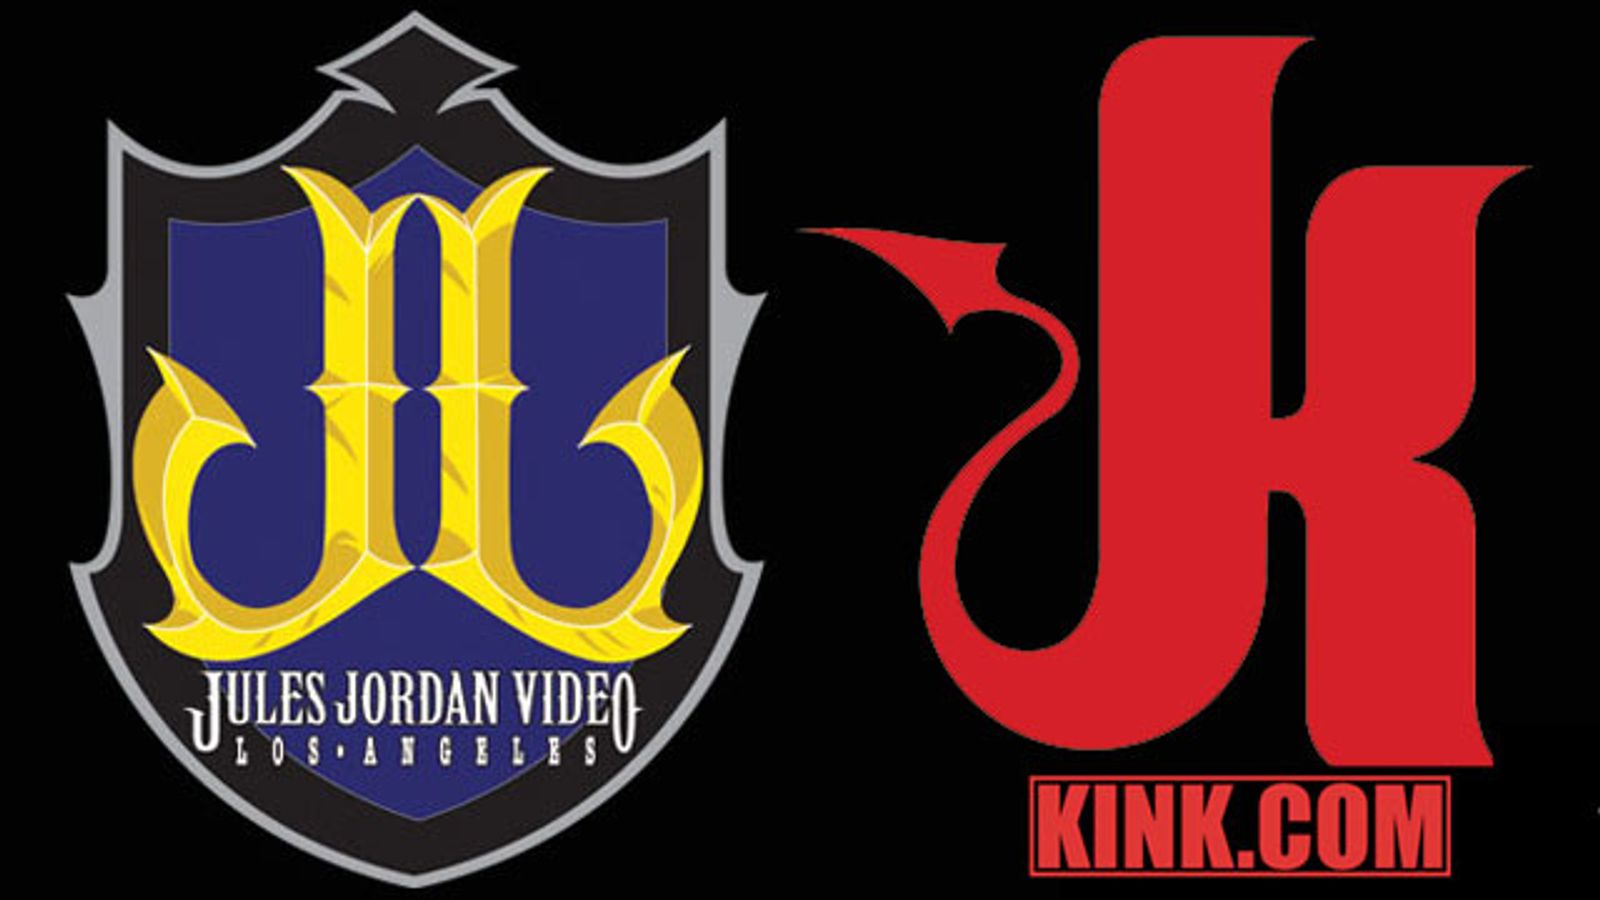 Jules Jordan Announces DVD Distribution Deal With Kink.com